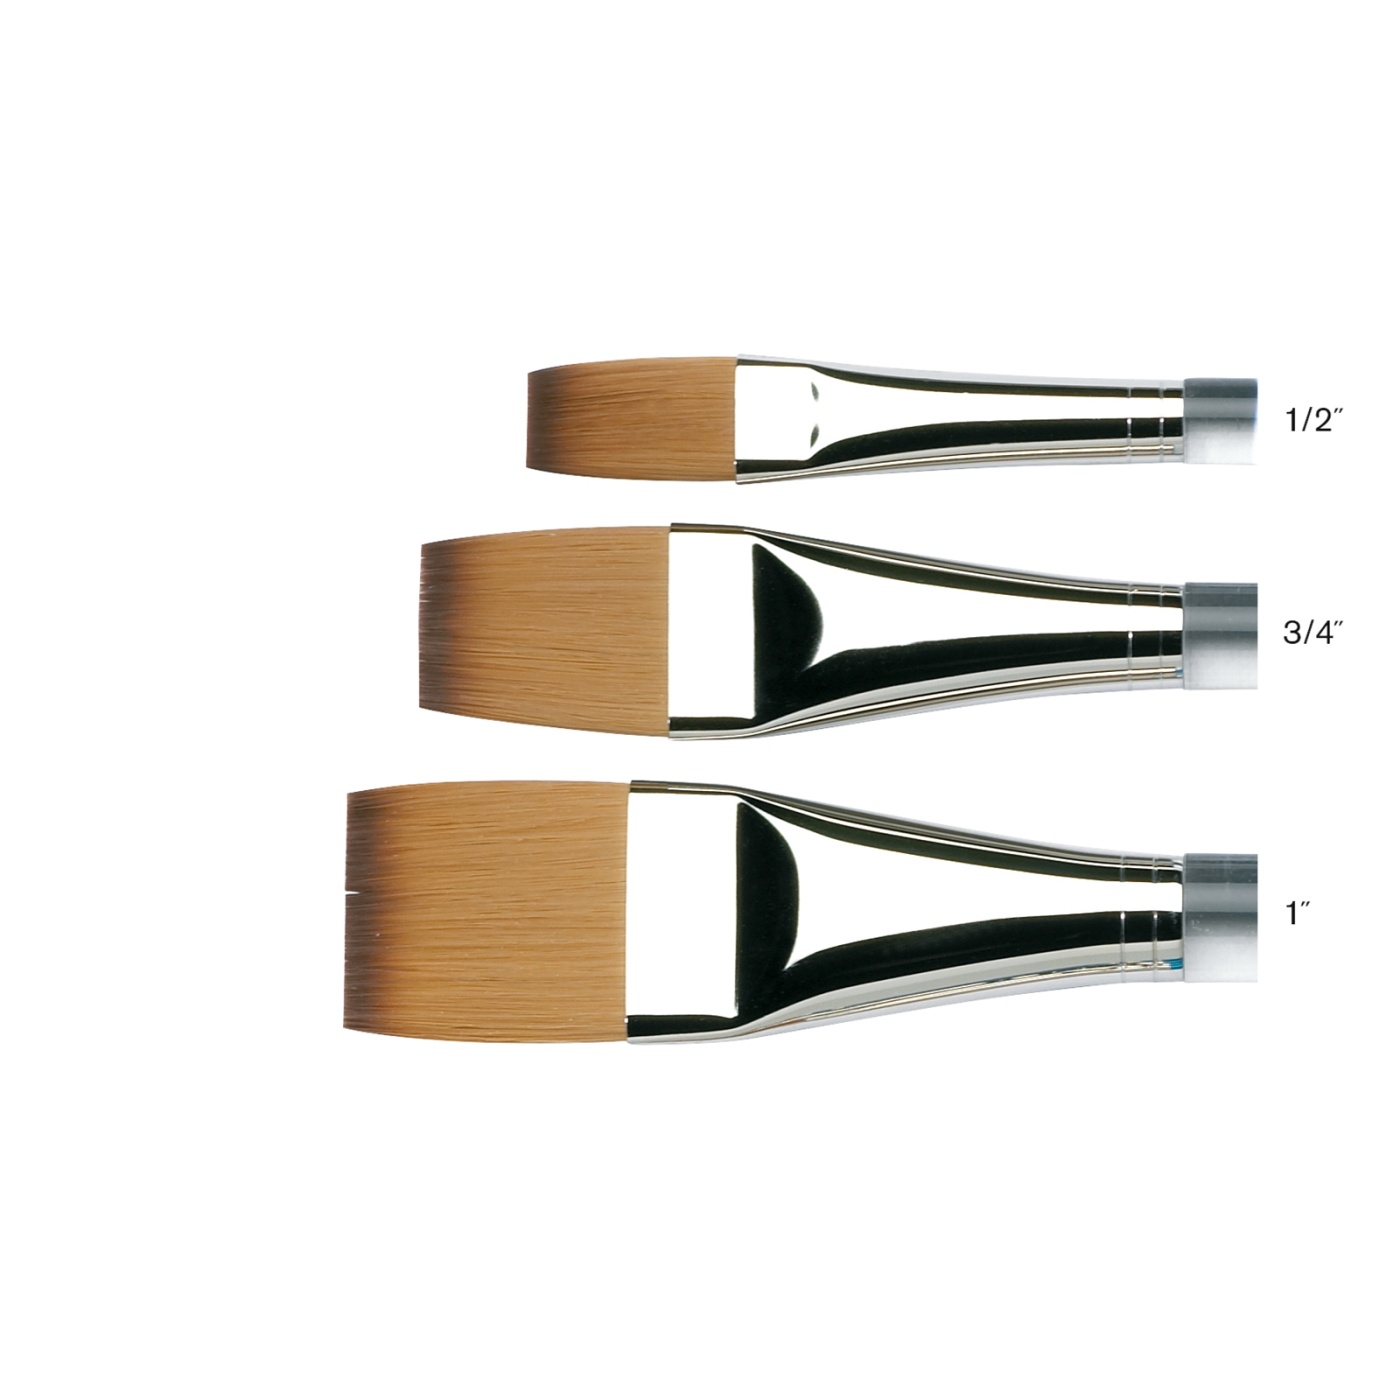 Cotman Brush - Series 777 Flat 13 i gruppen Kunstnerartikler / Pensler / Syntetiske pensler hos Voorcrea (107634)